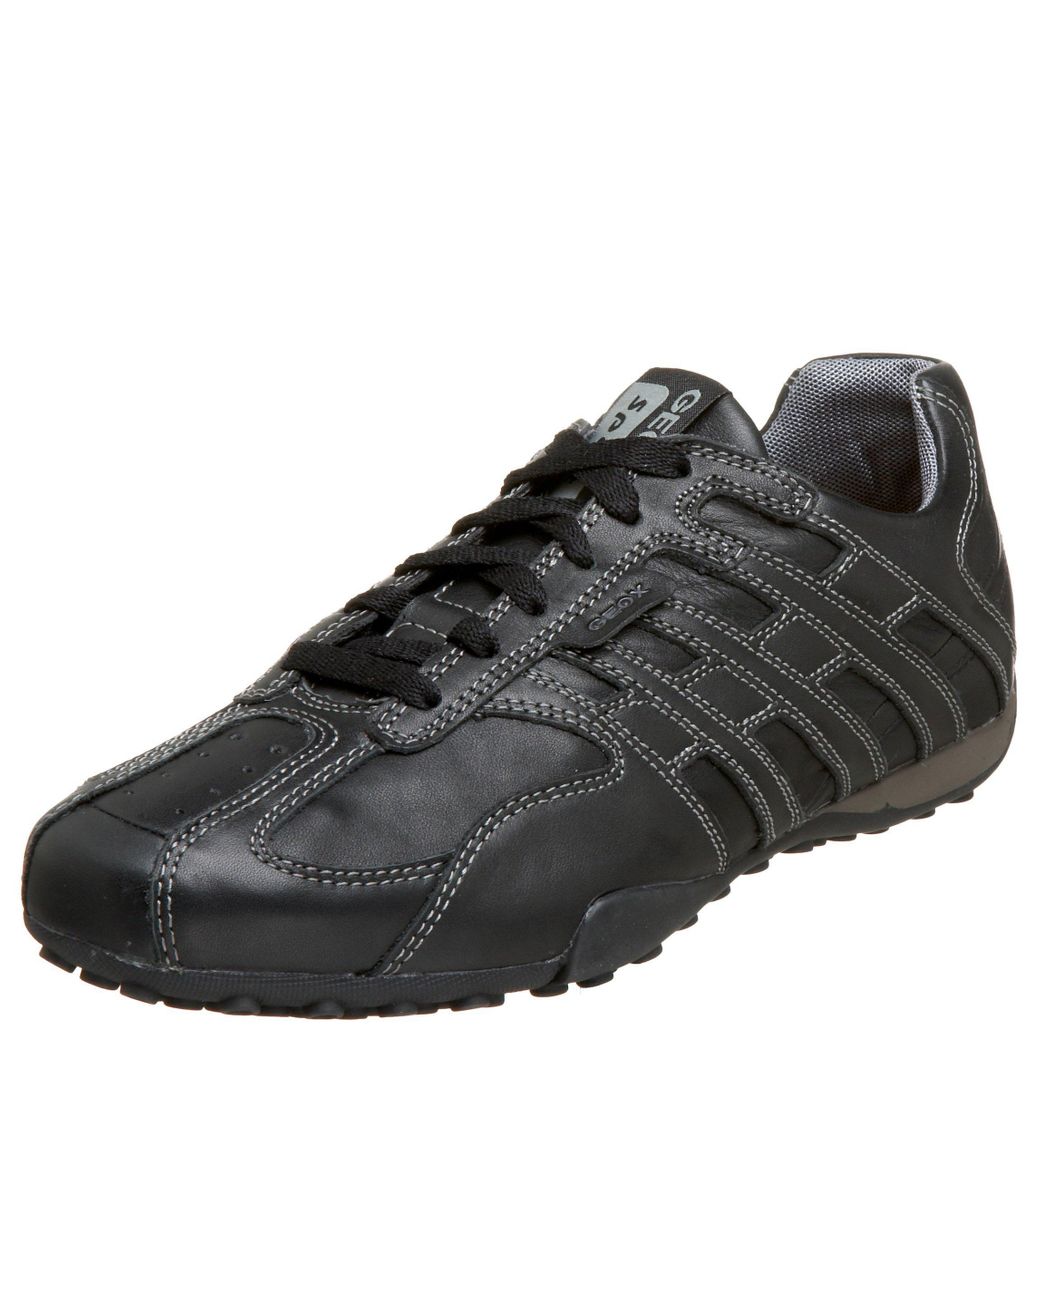 Geox Uomo Snake Fashion Sneaker,black Oxford,47 Eu for Men | Lyst